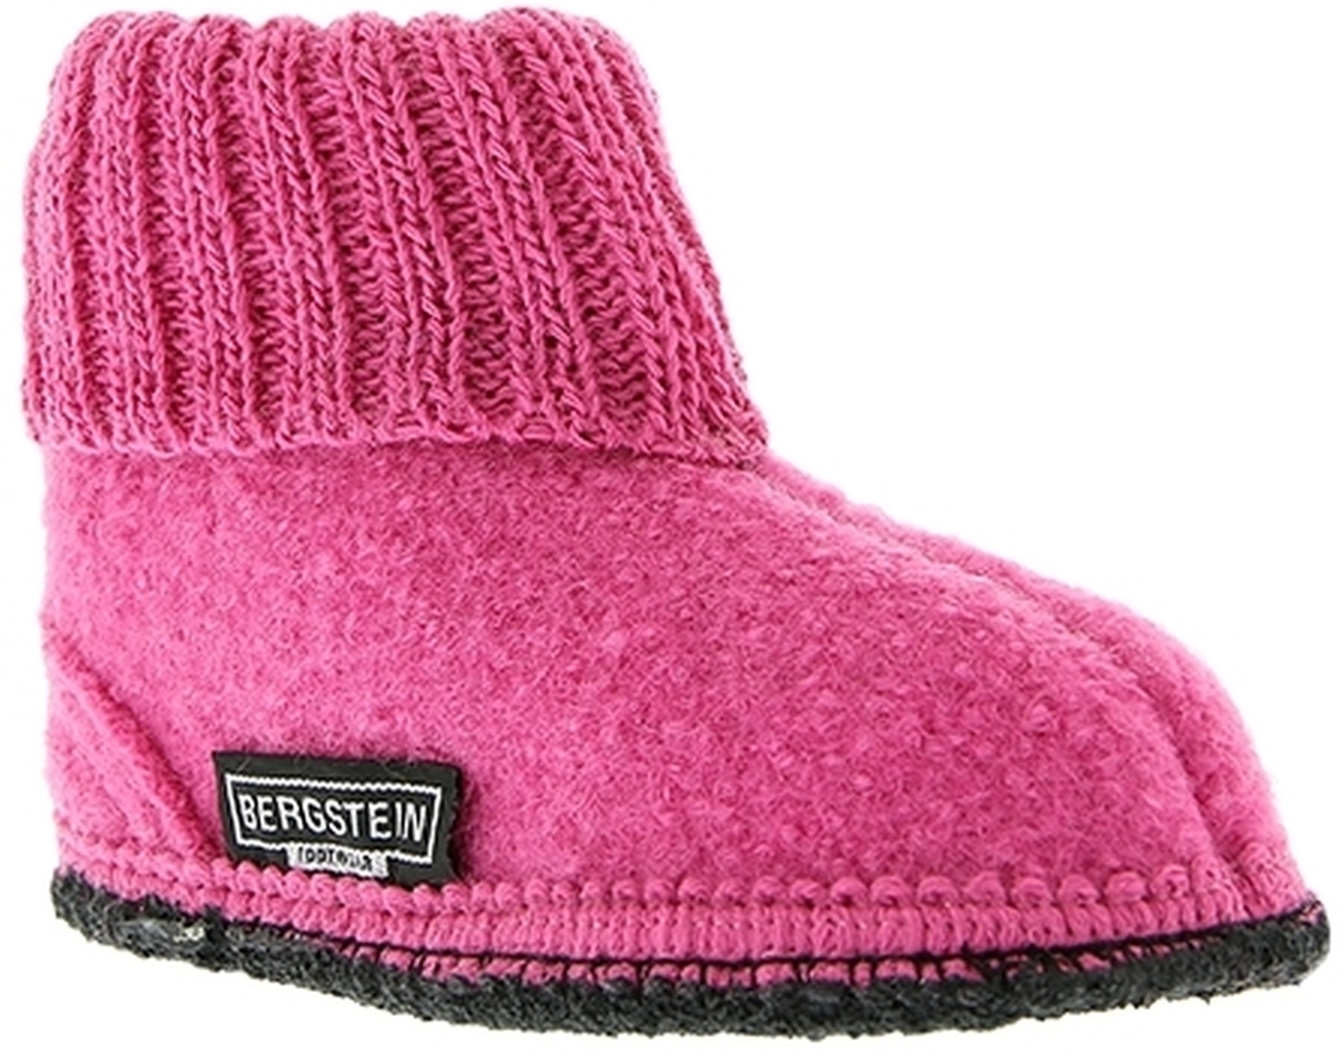 Bergstein Cozy Pink Wool